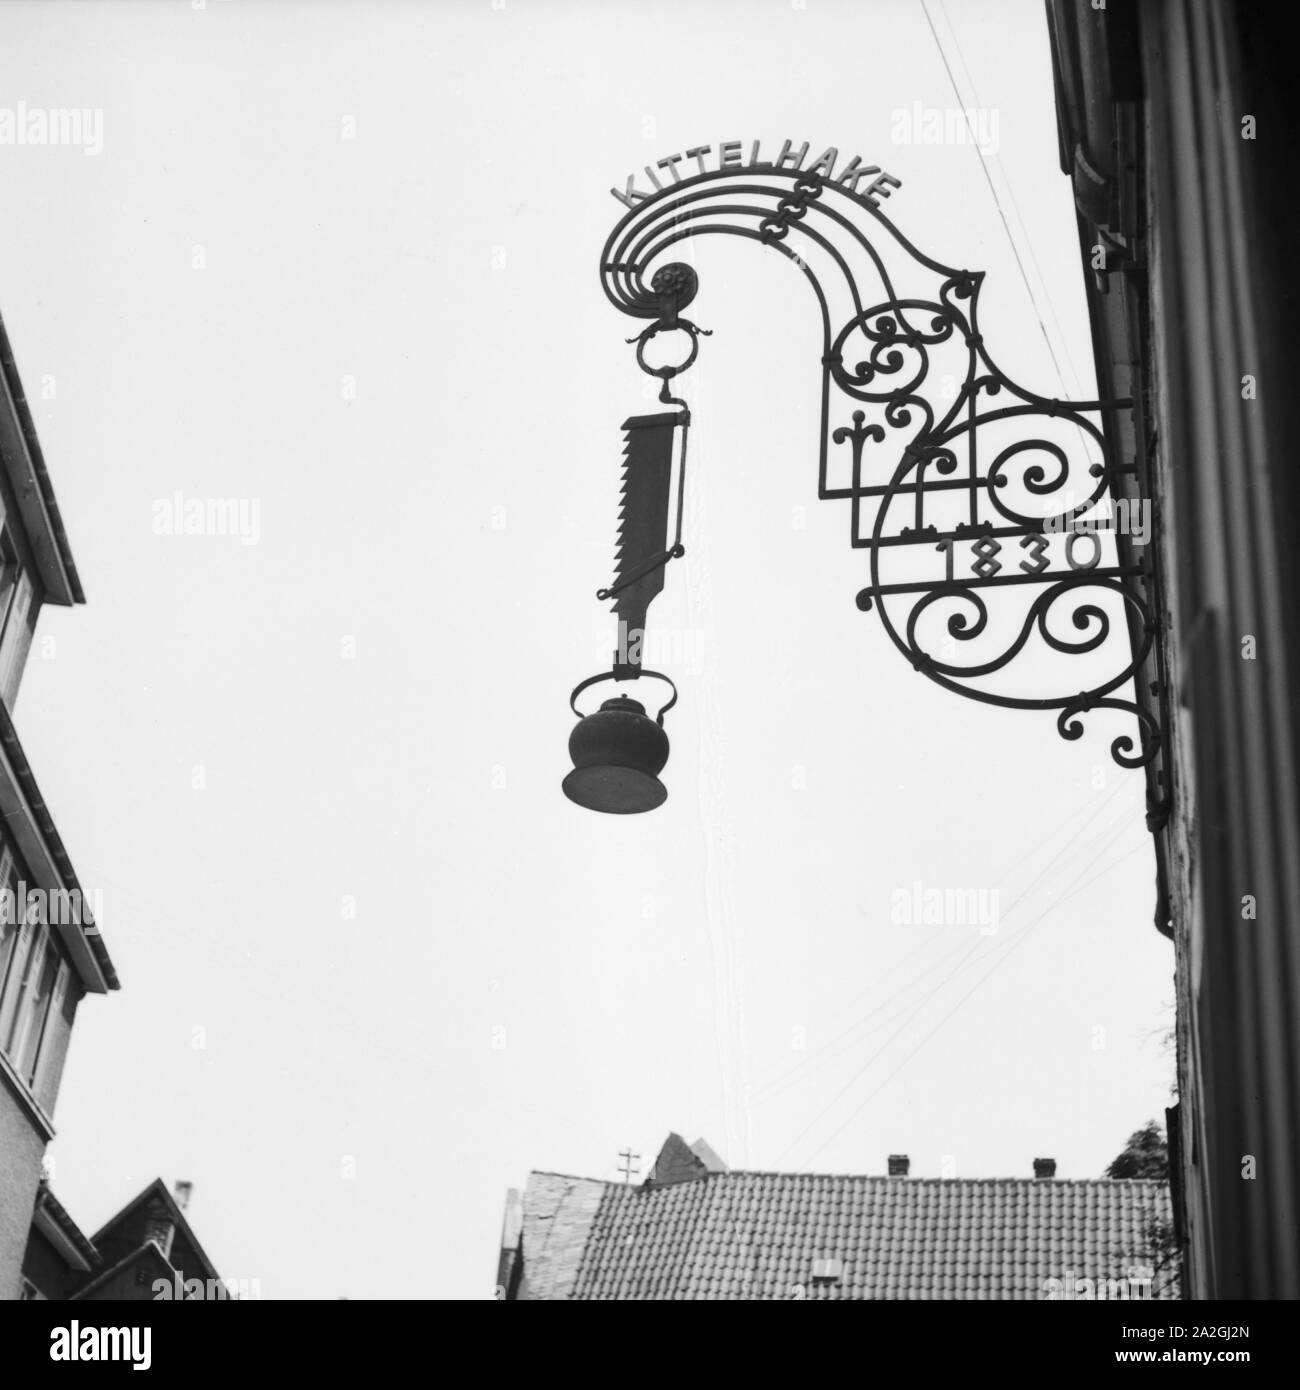 Der Schlosserei Ladenschild Kittelhake in der Altstadt von Soest en Westfalen, Deutschland 1930er Jahre. Signo de fabricación del Kittelhake cerrajería en la vieja ciudad de Soest en Westfalia, Alemania 1930. Foto de stock